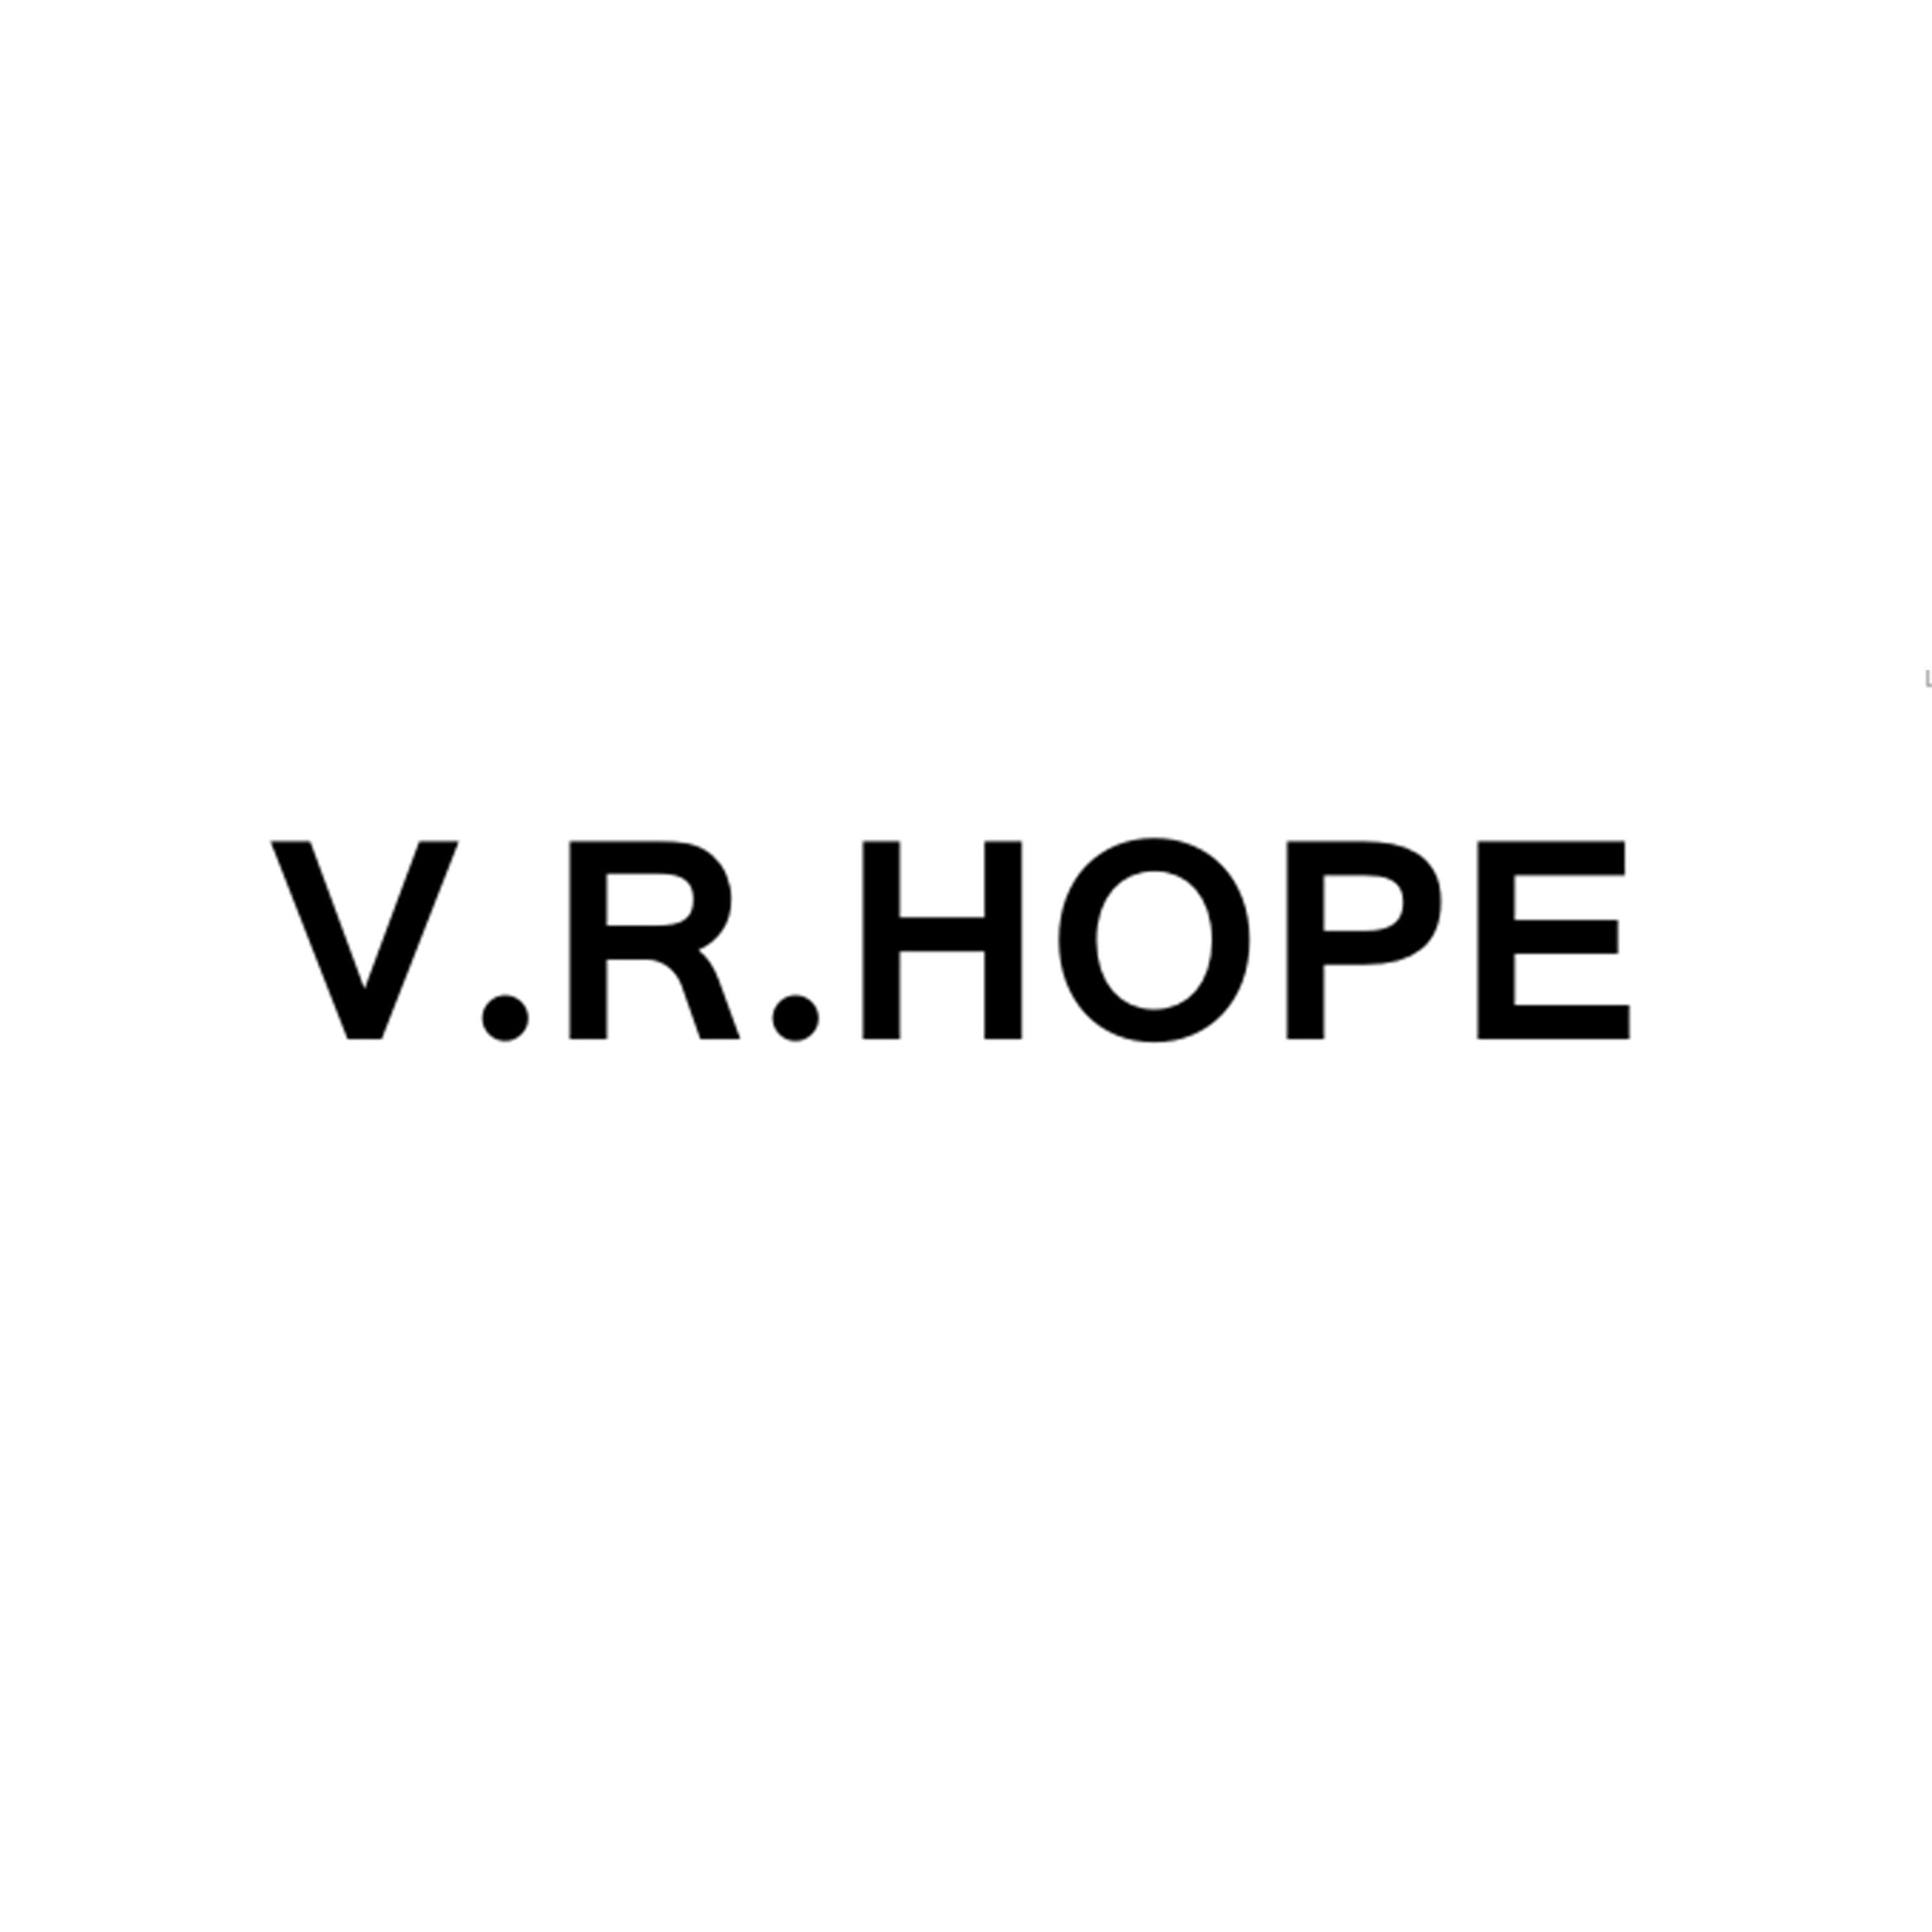  V.R.HOPE